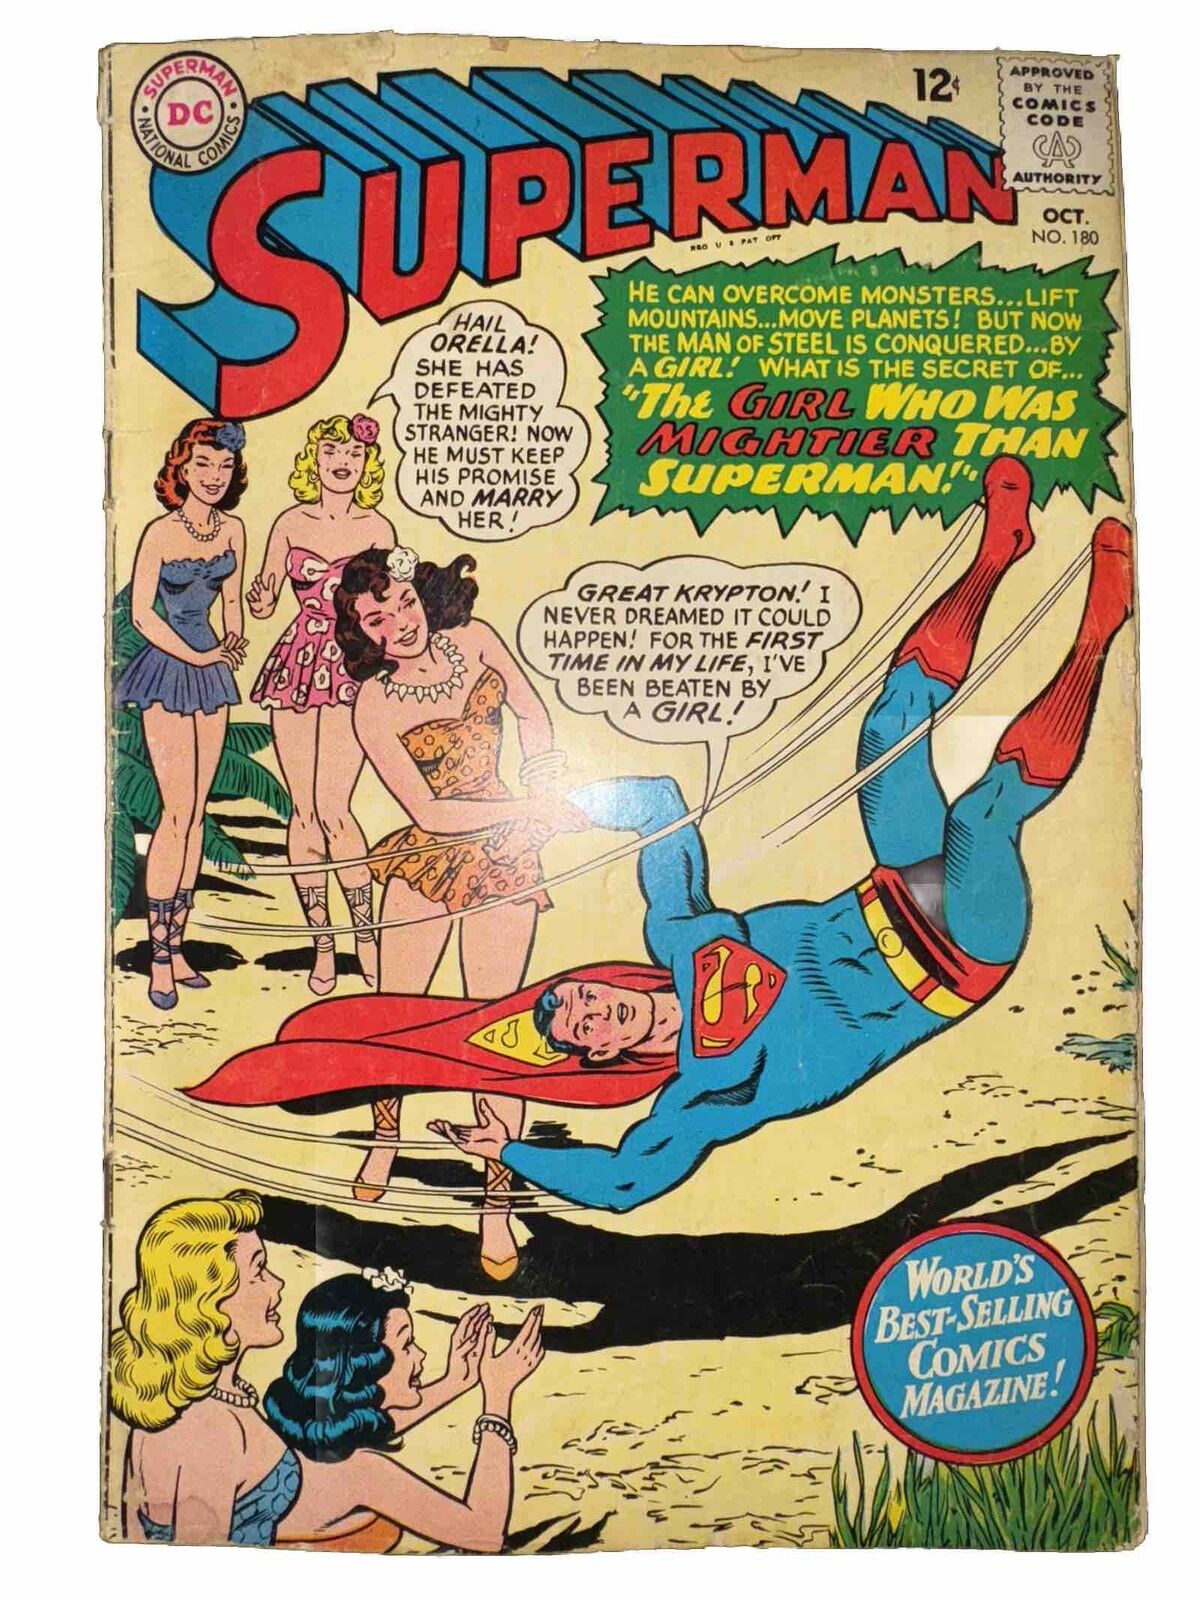 1965 #180 SUPERMAN SILVERAGE DC COMICS SUPER COLORS 12¢ OLD VINTAGE ORIGINAL